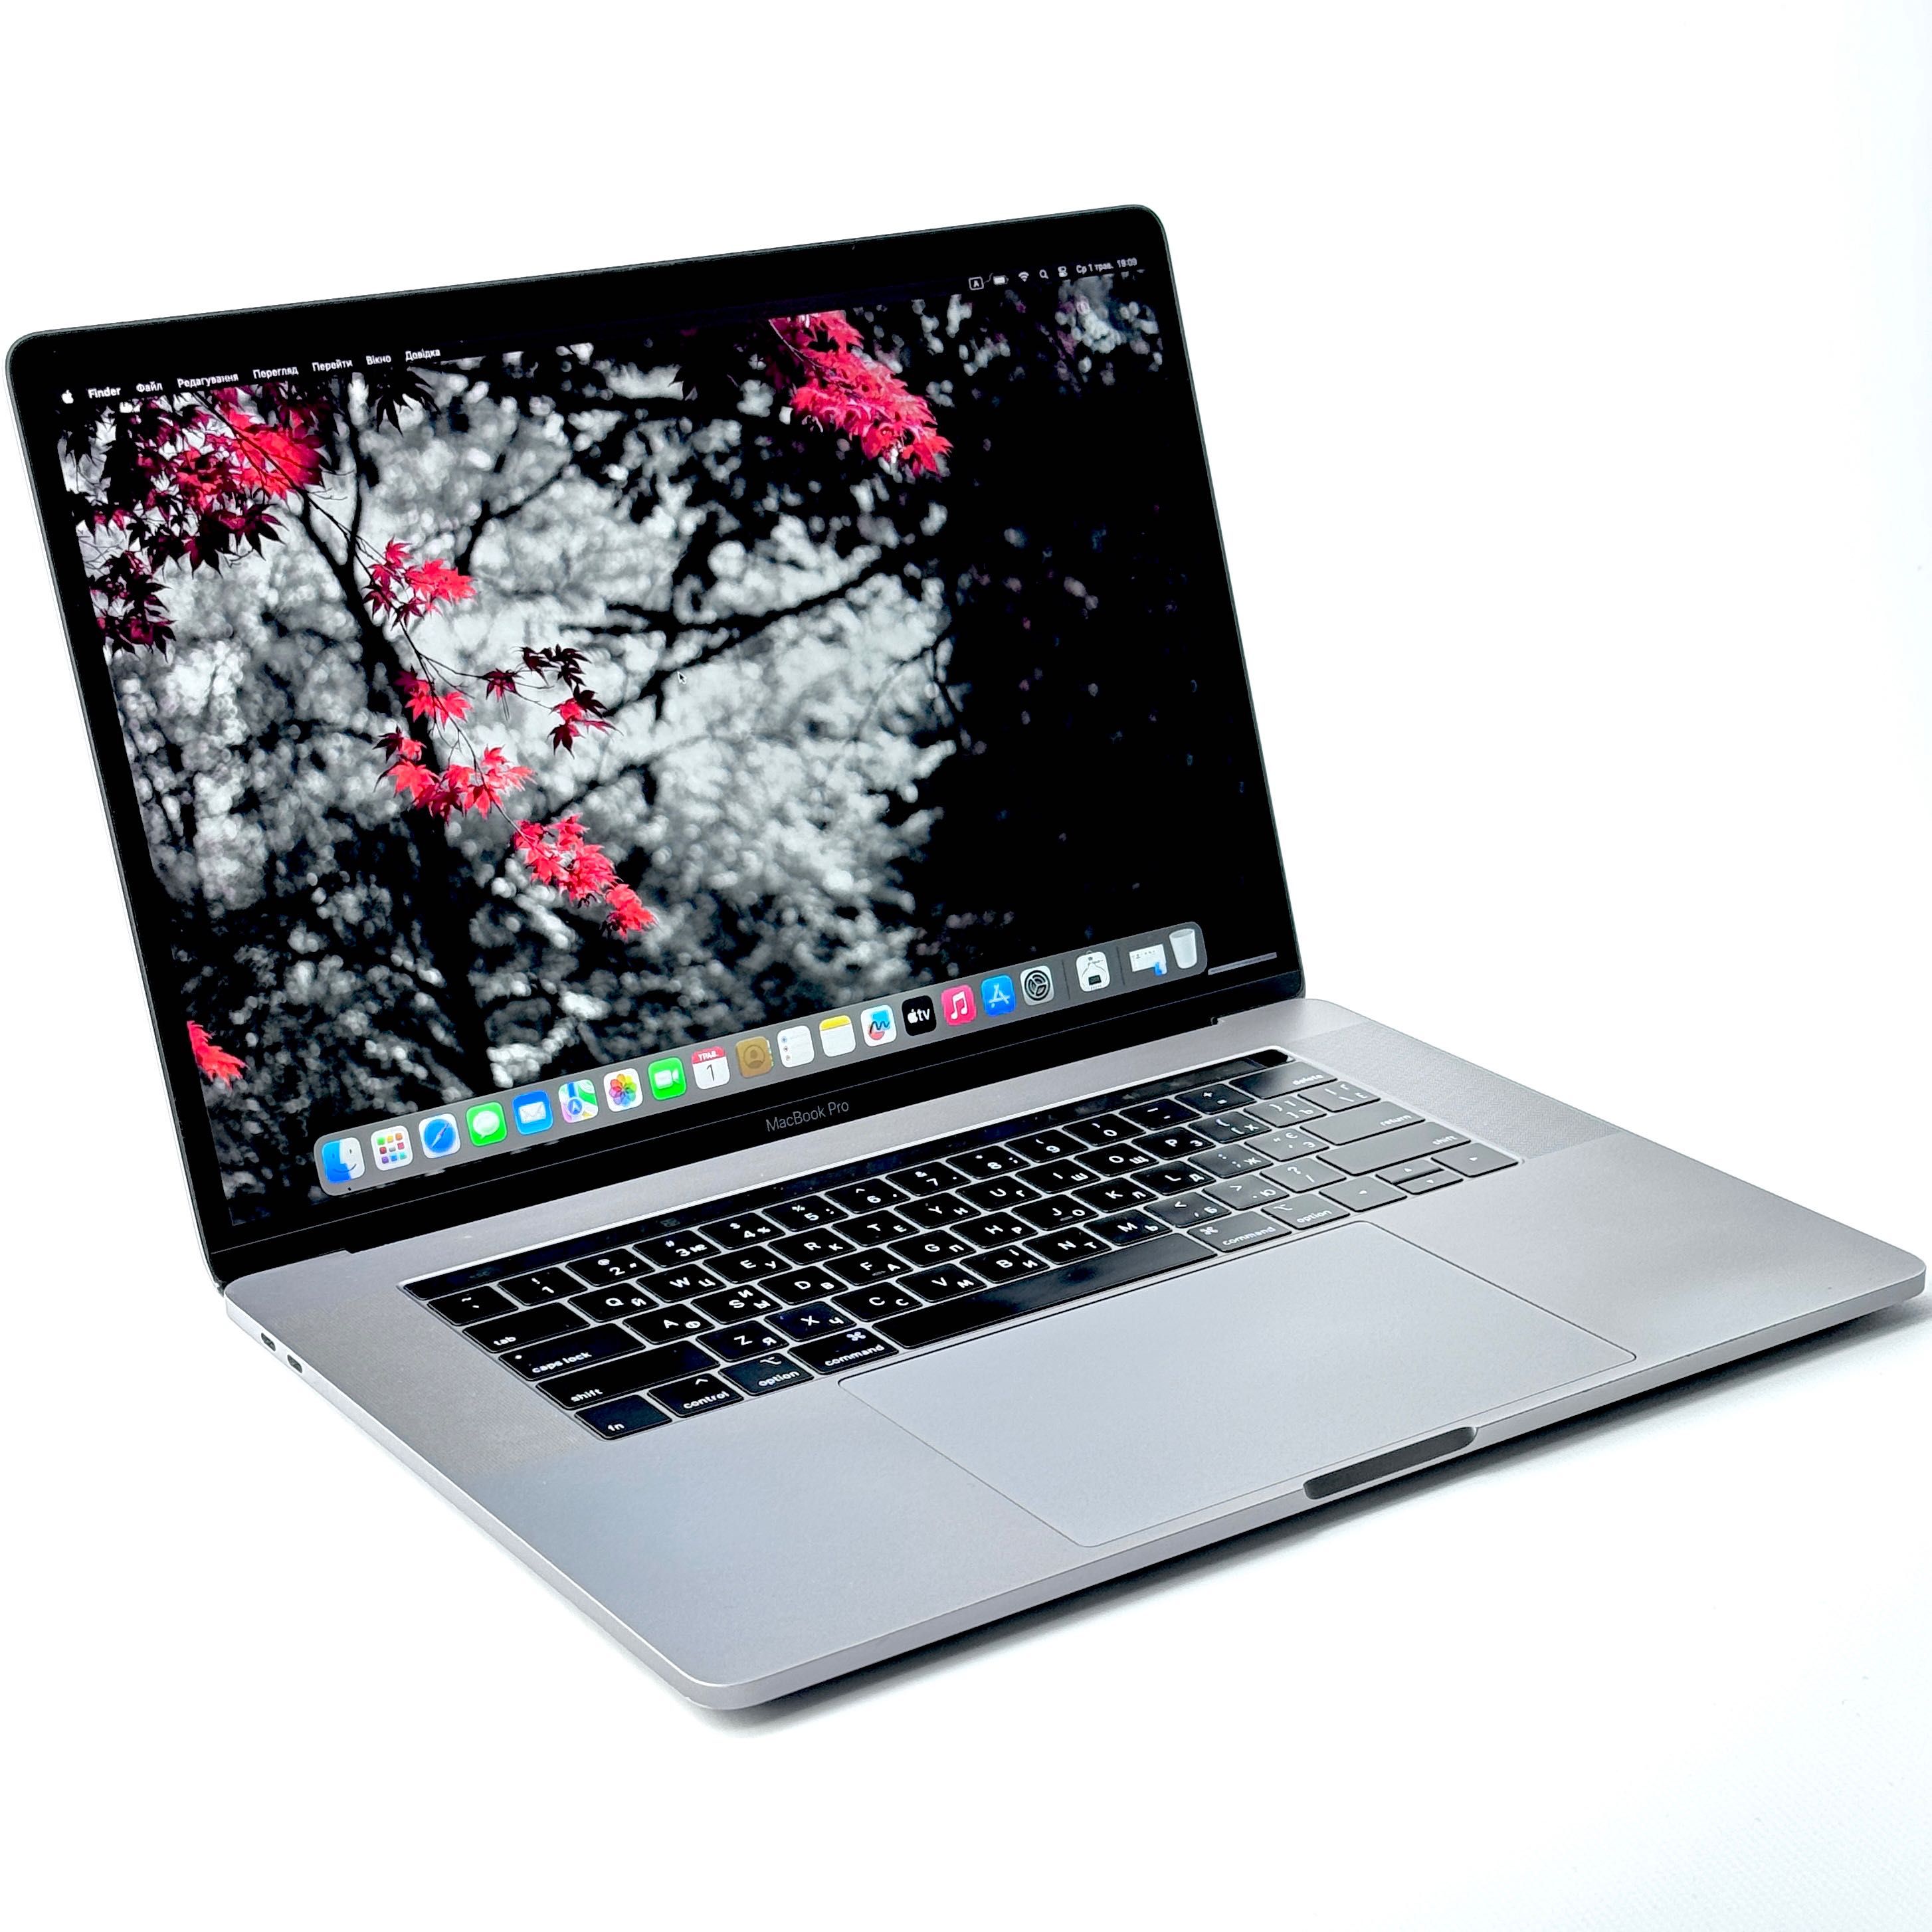 УЦІНКА! MacBook Pro 15 2019 i9|16|512|pro 555. ШОУ-РУМ+, TRADE IN+